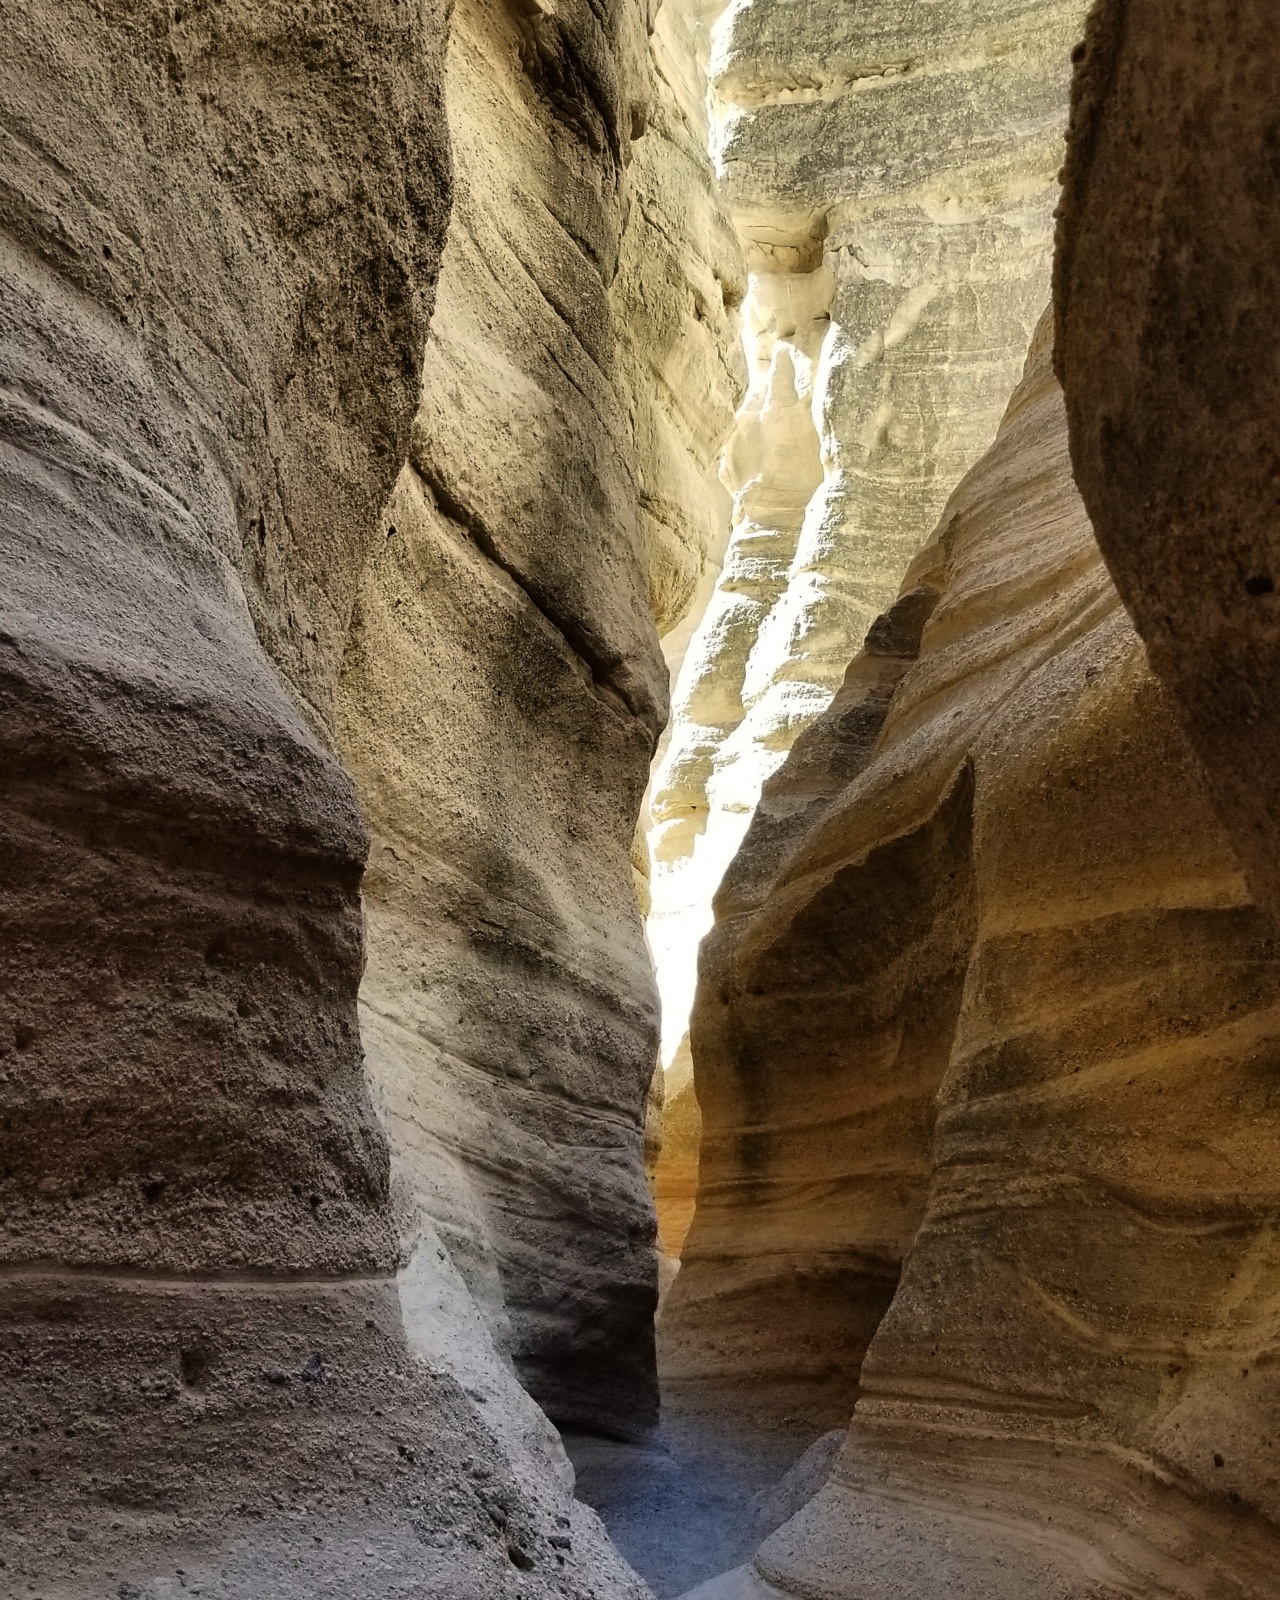 Slot Canyon in Bandelier National Monument, near Santa Fe, New Mexico.